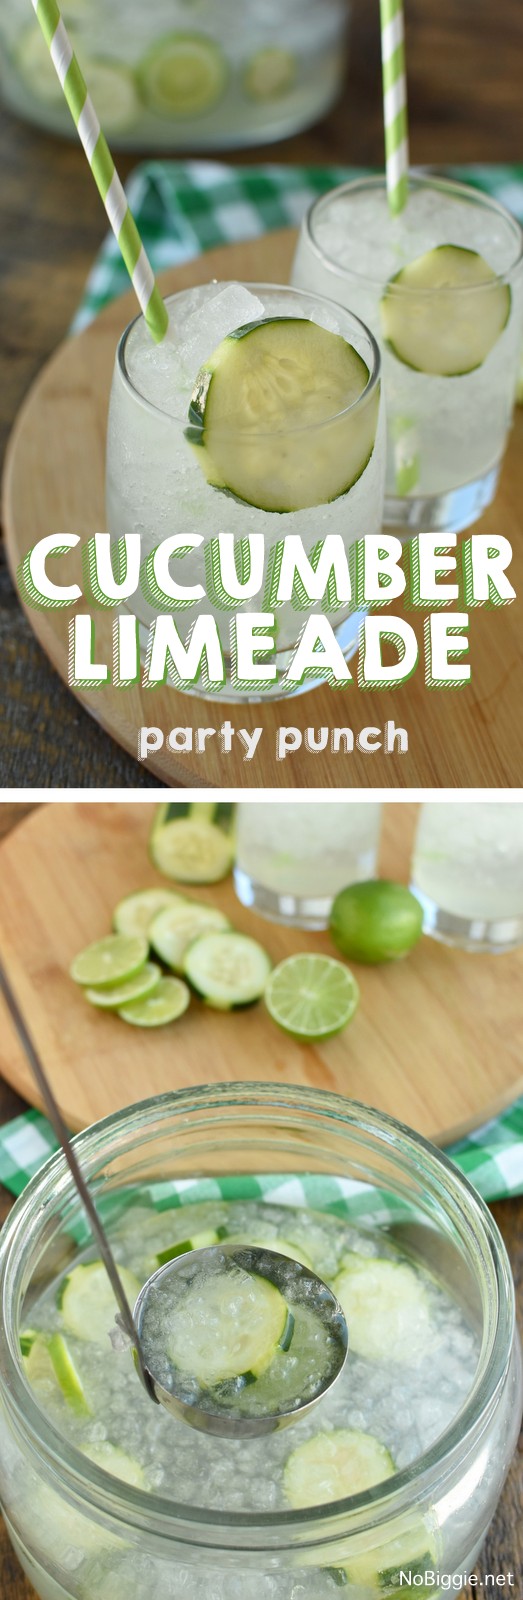 Cucumber Limeade party punch | NoBiggie.net